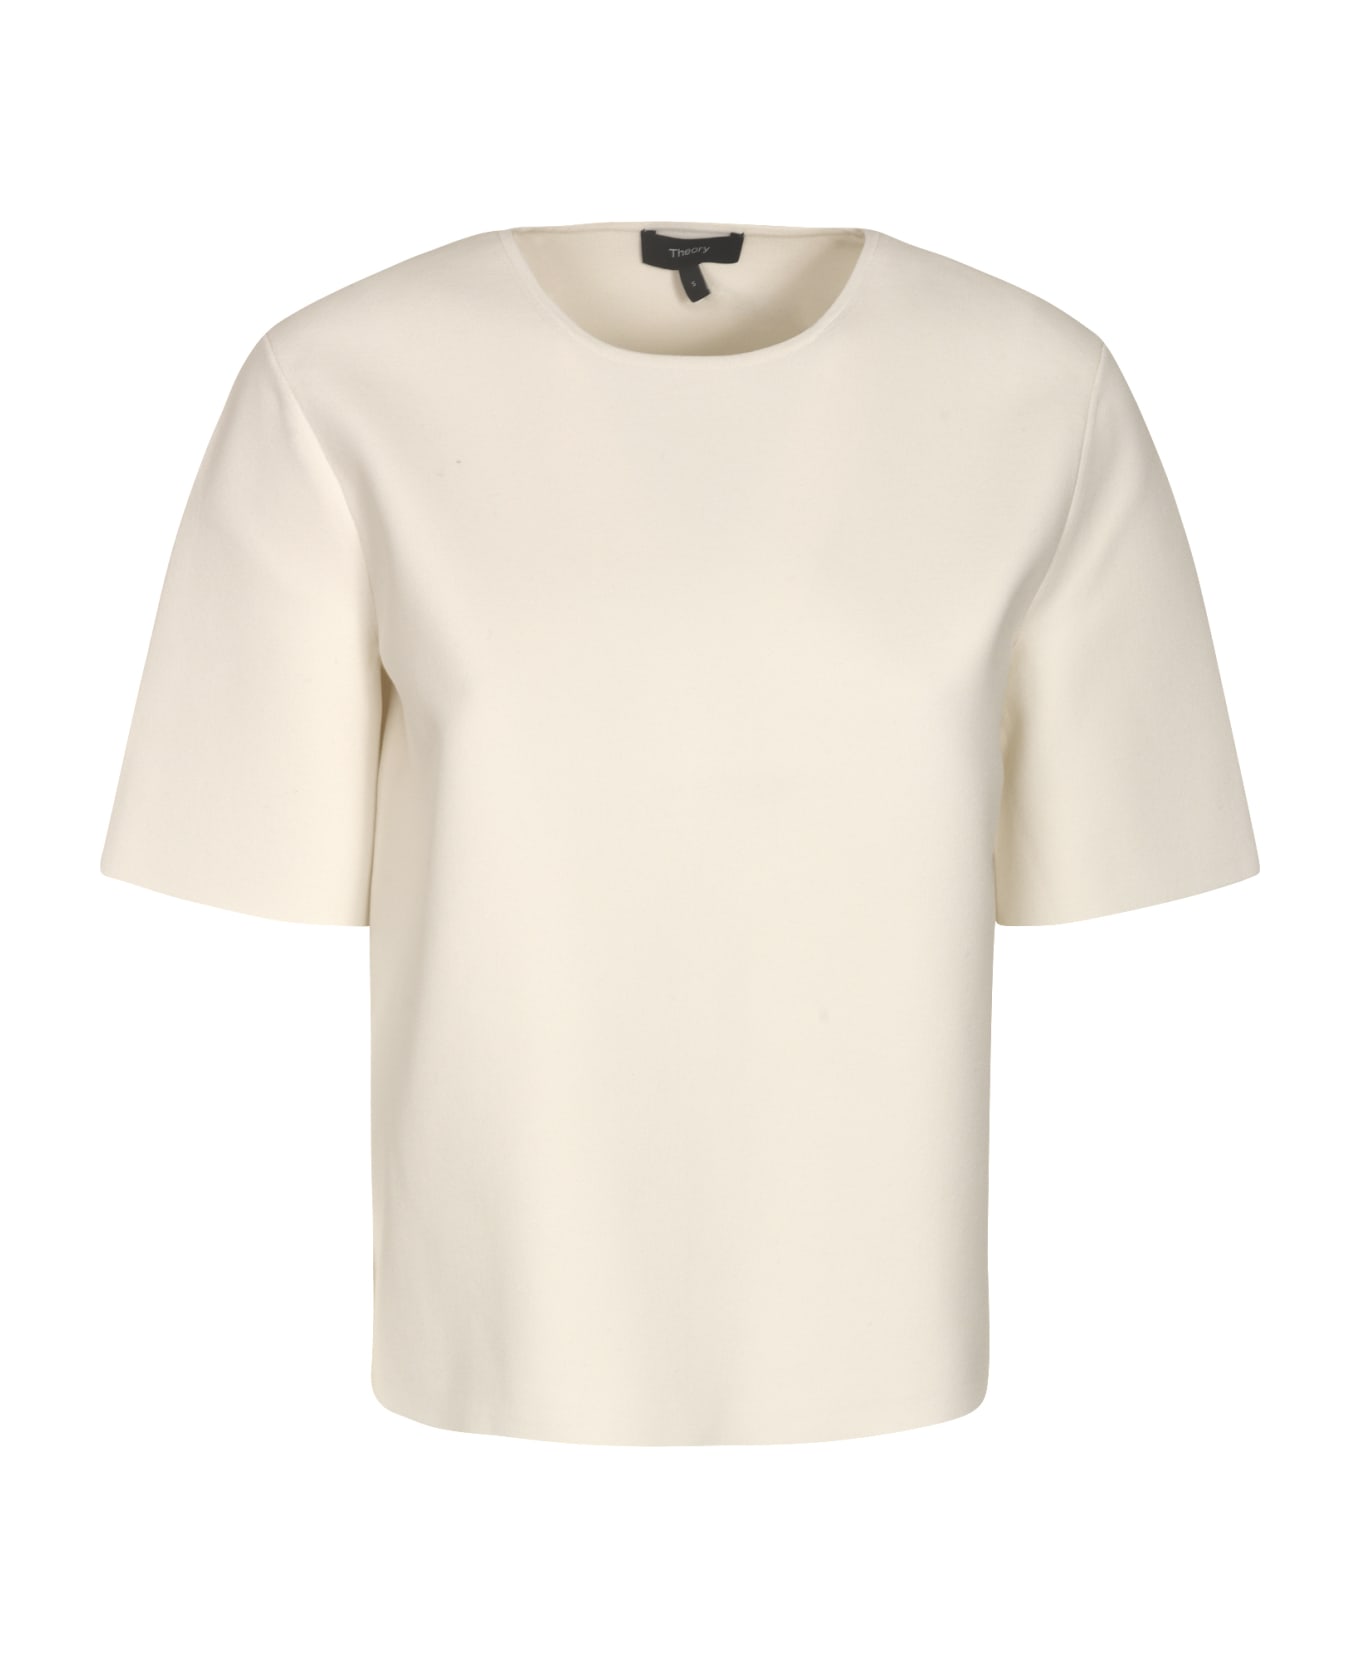 Theory Round Neck Plain Top - White Tシャツ